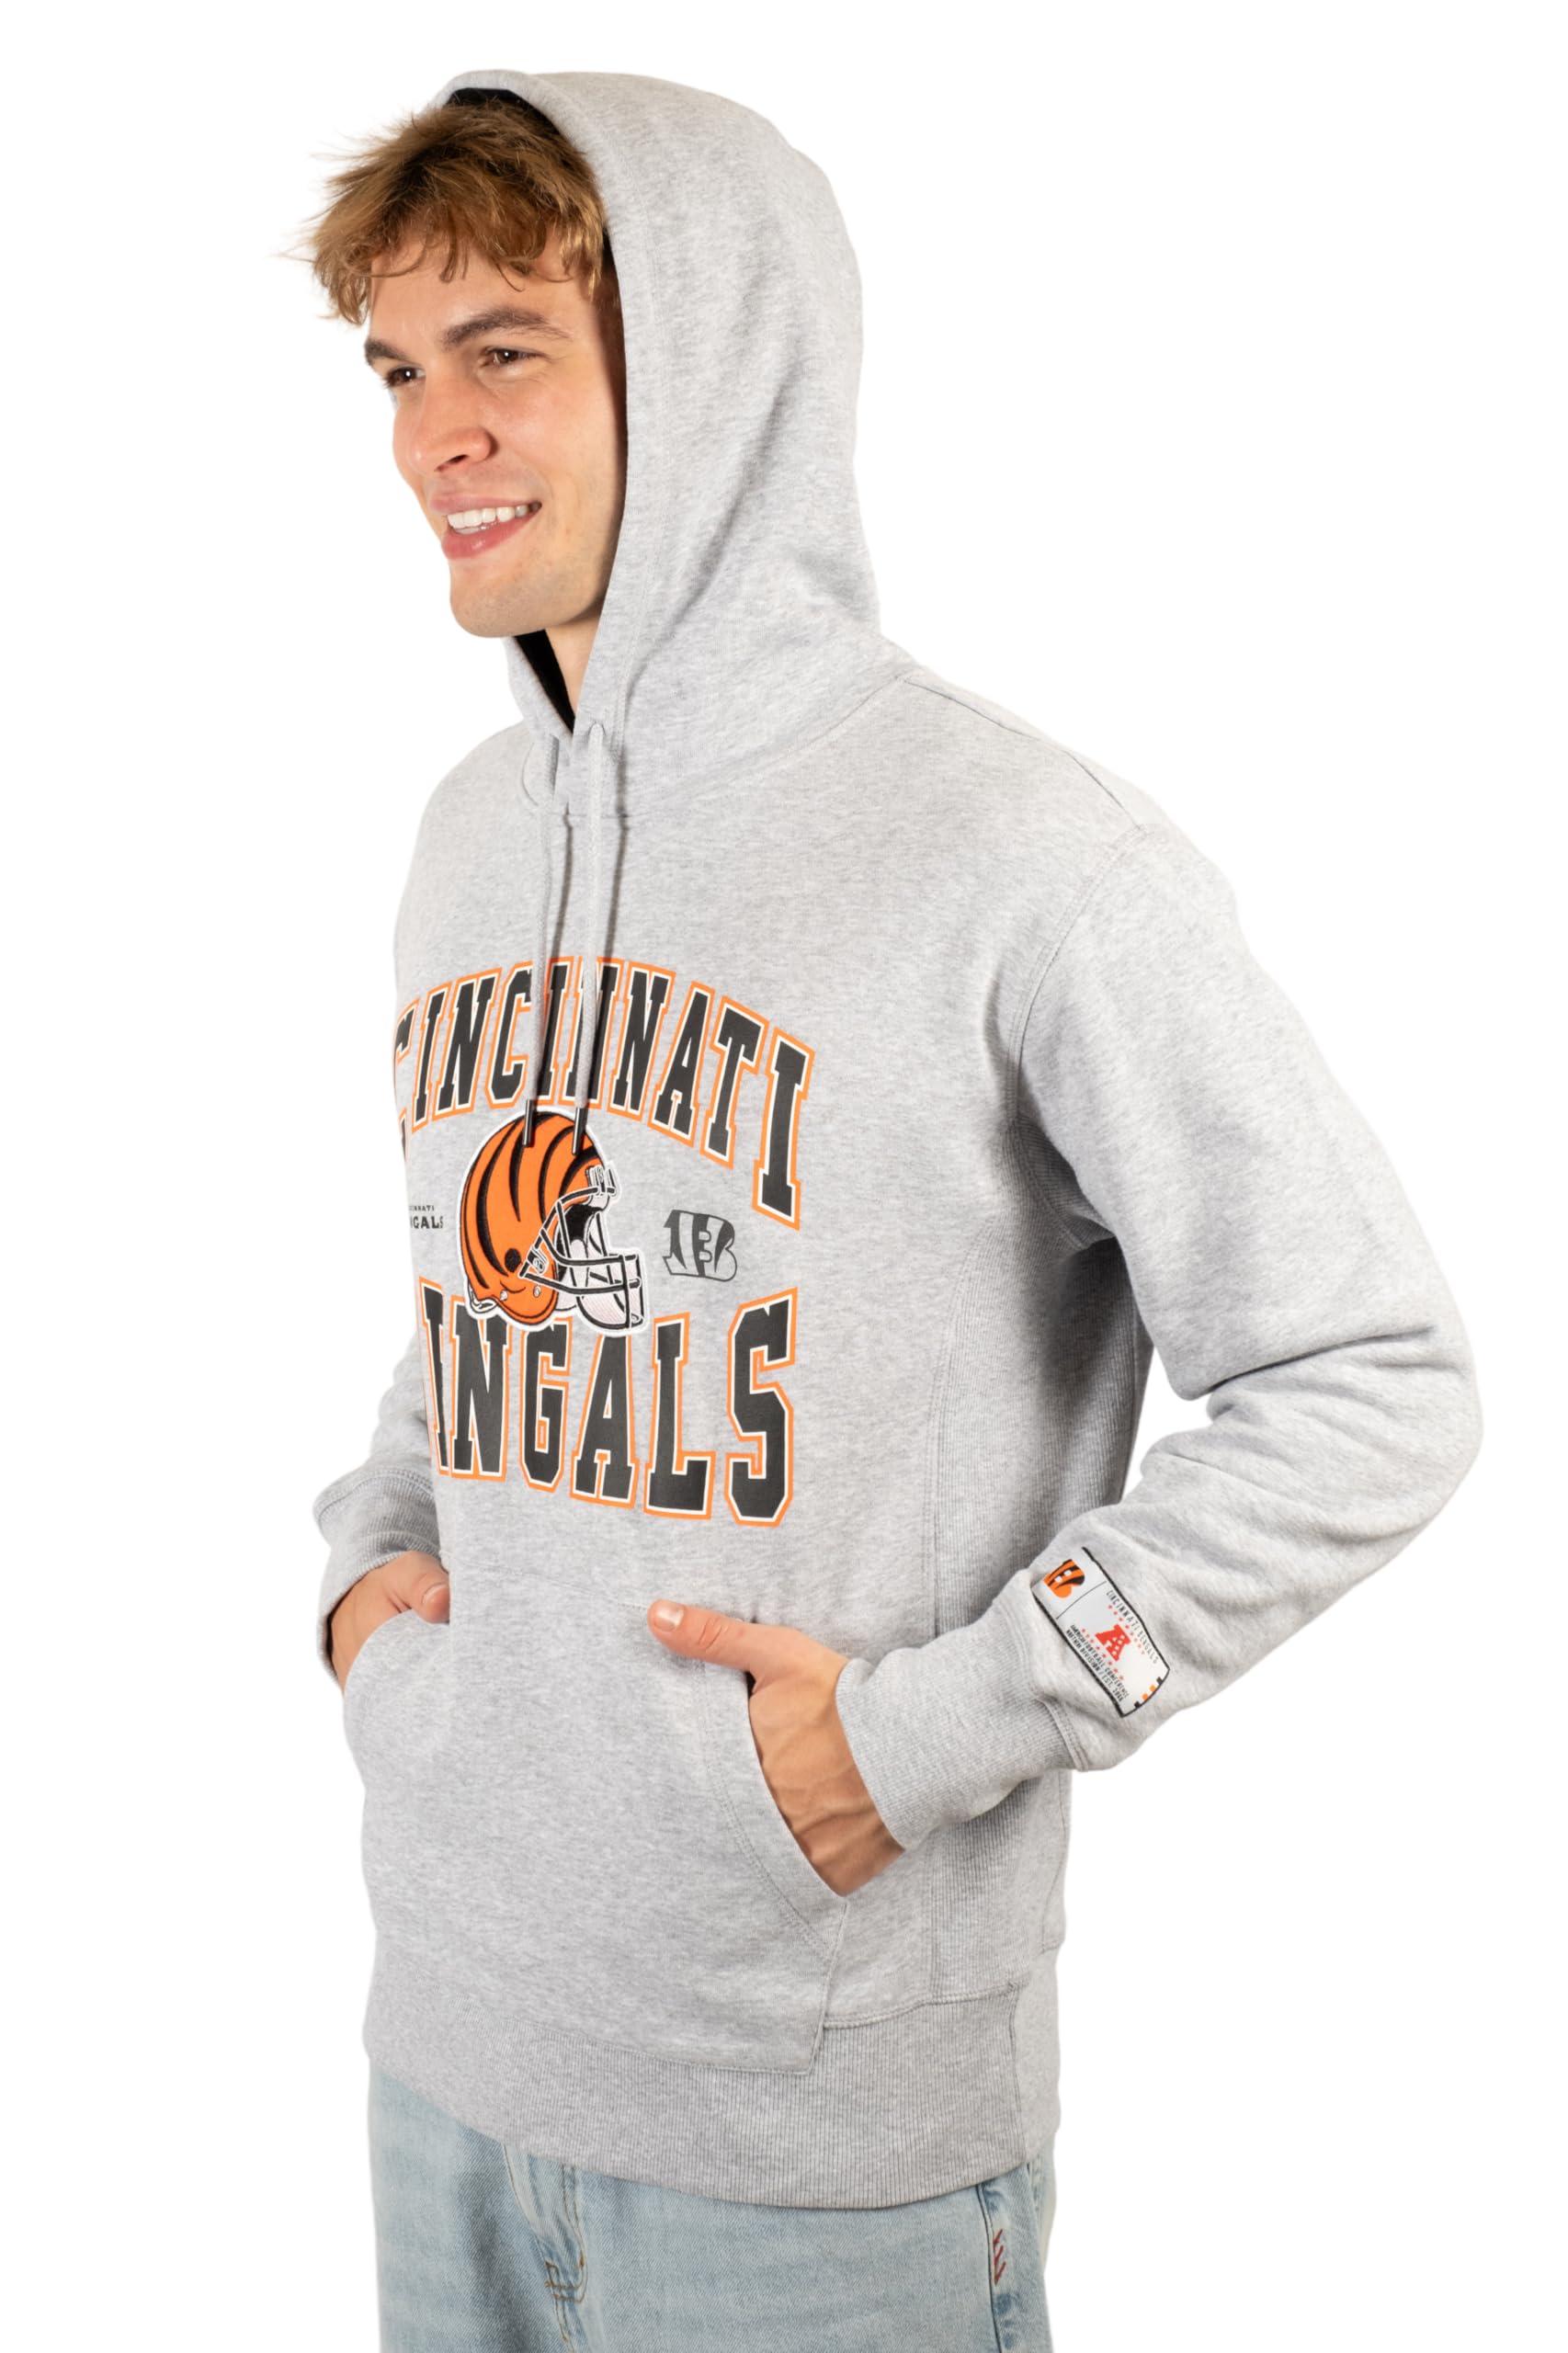 Ultra Game NFL Cincinnati Bengals Mens Ultimate Quality Super Soft Hoodie Sweatshirt|Cincinnati Bengals